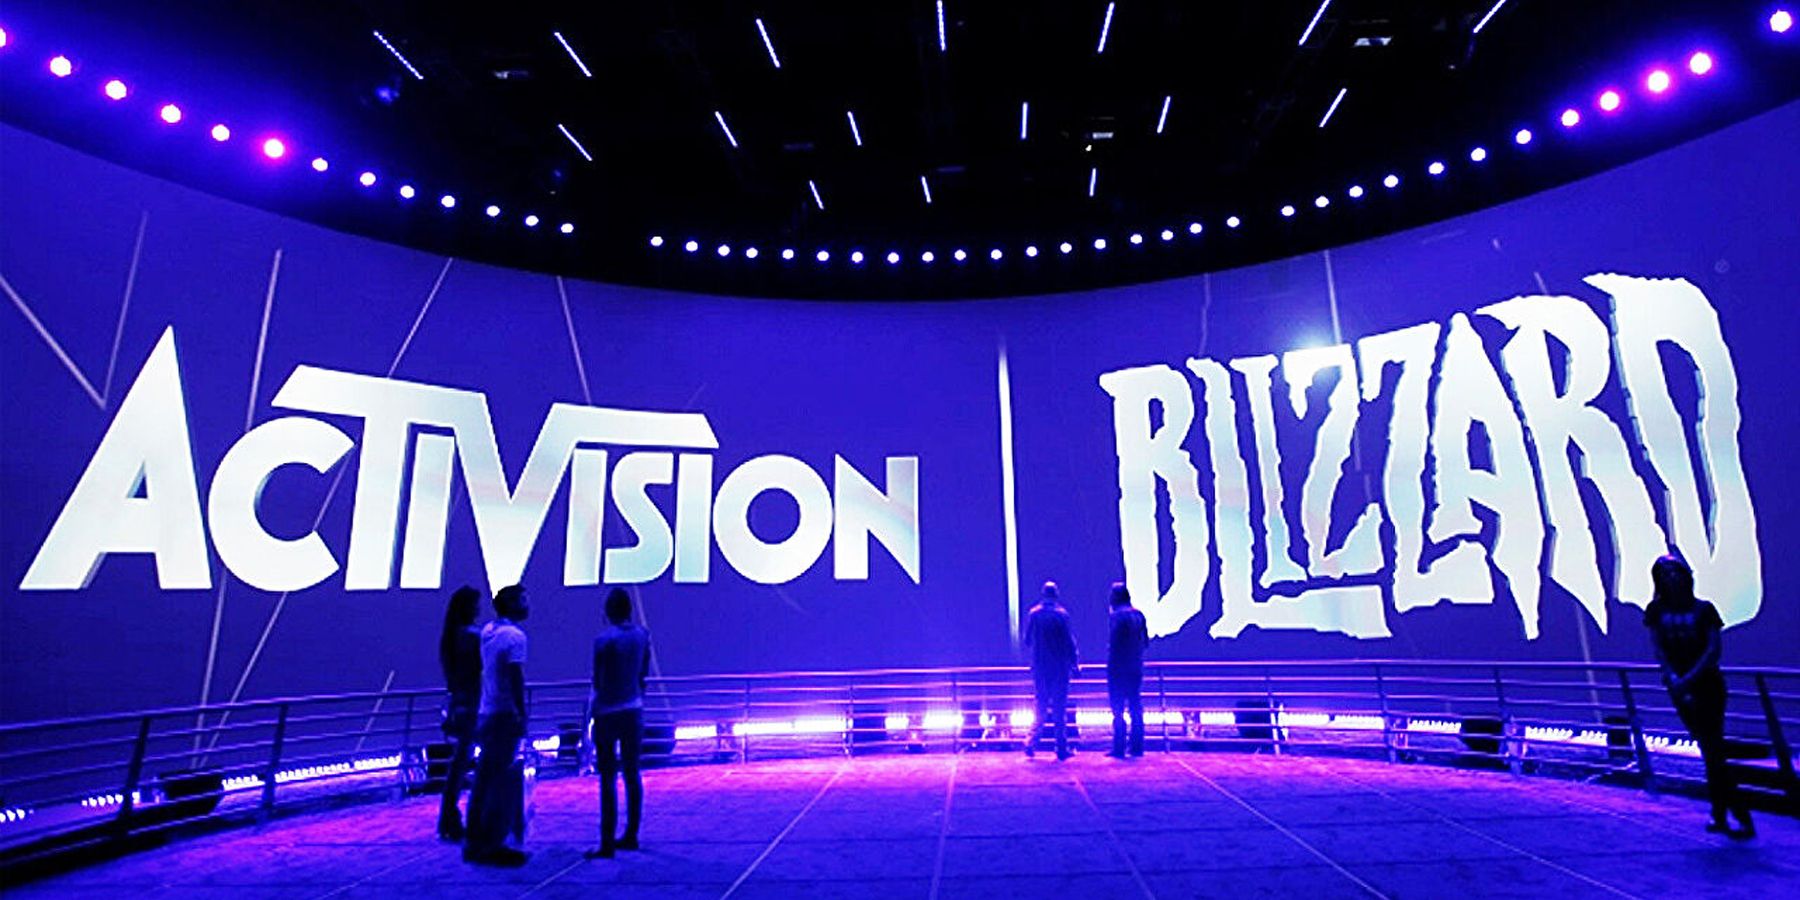 Activision Blizzard event photo